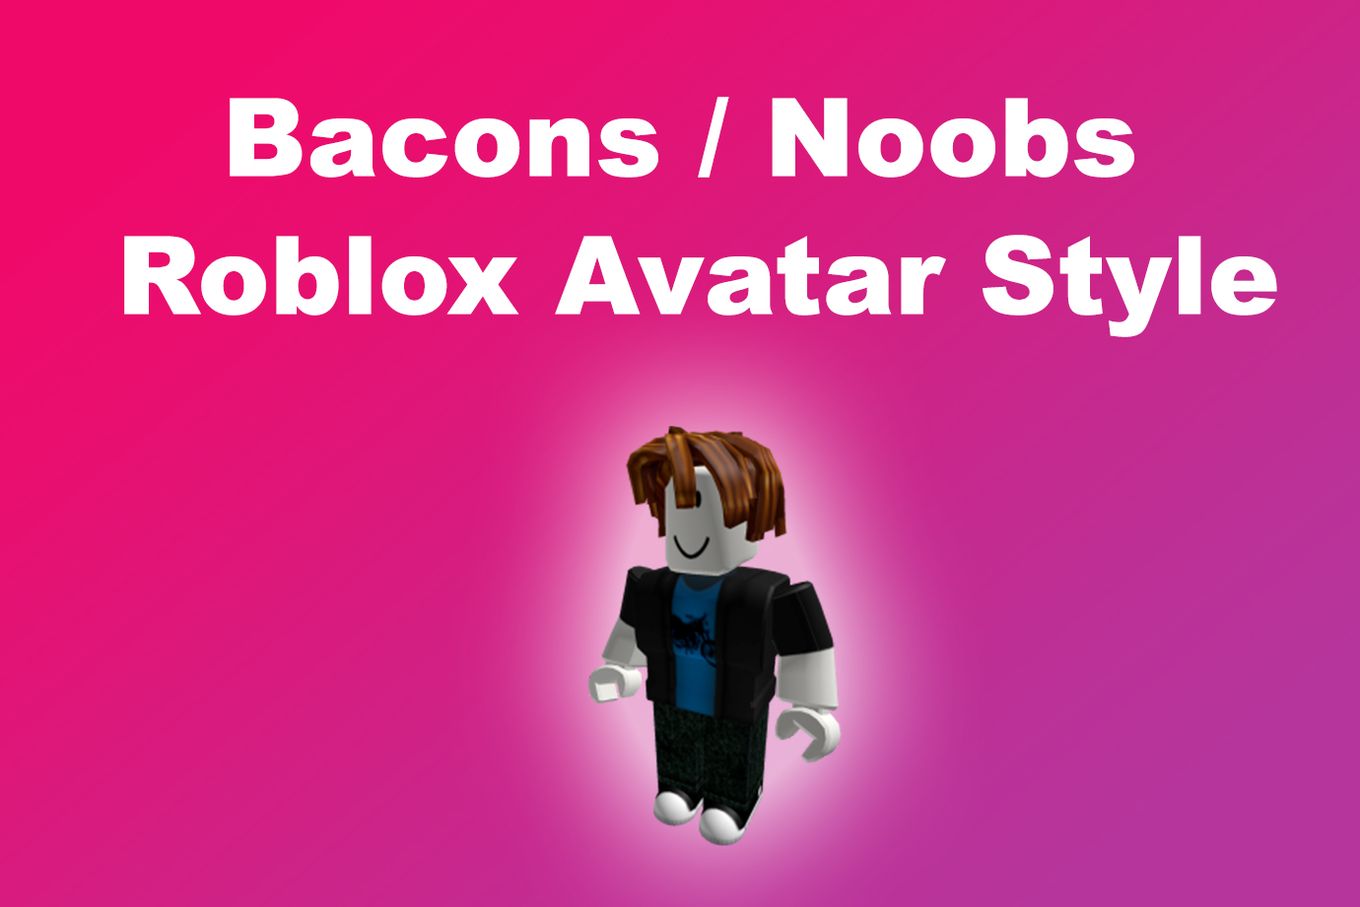 Bacon Roblox Avatar Style